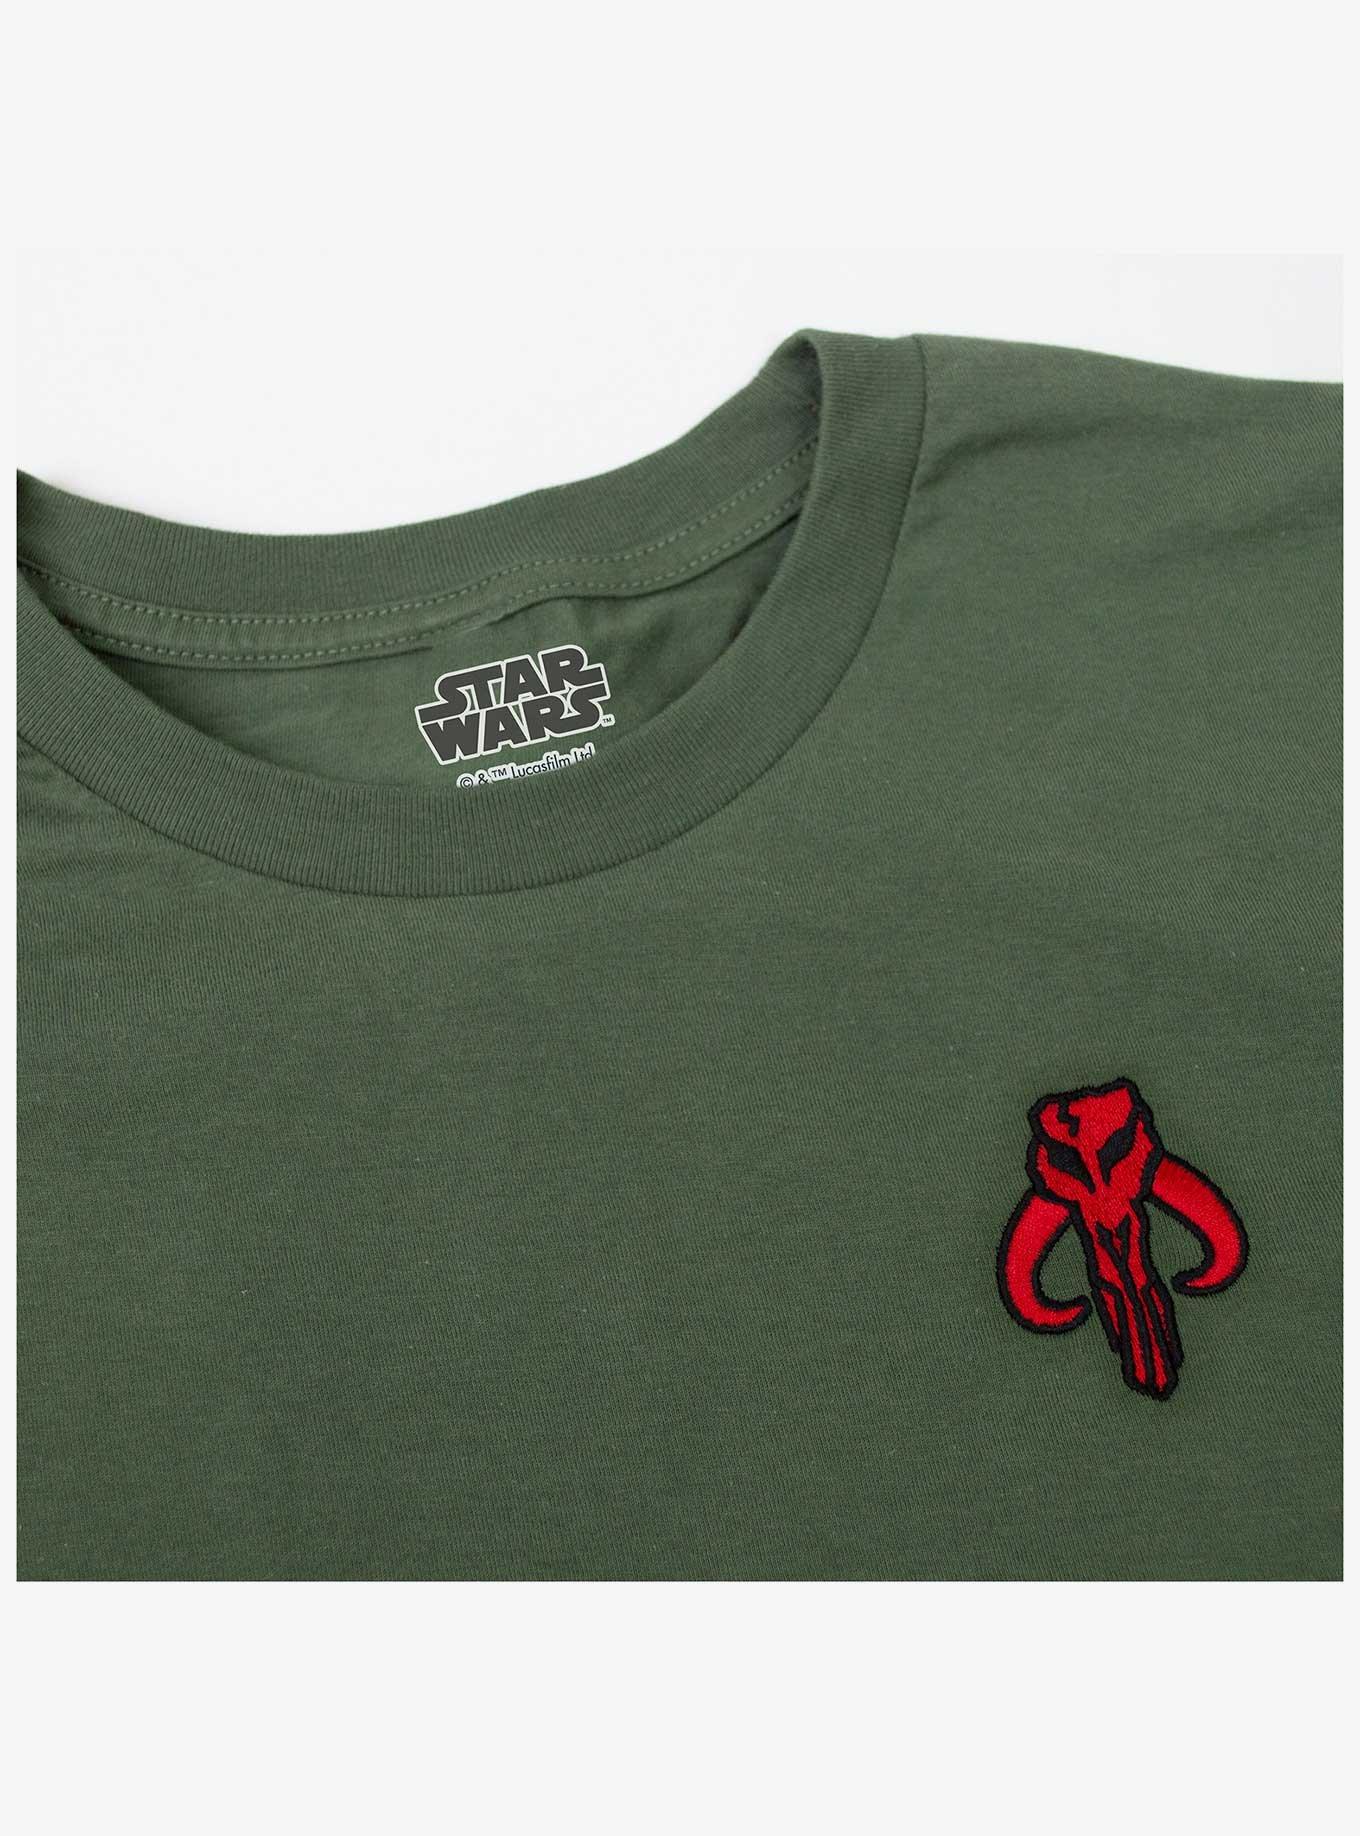 Star Wars Embroidered Mythosaur Skull T-Shirt